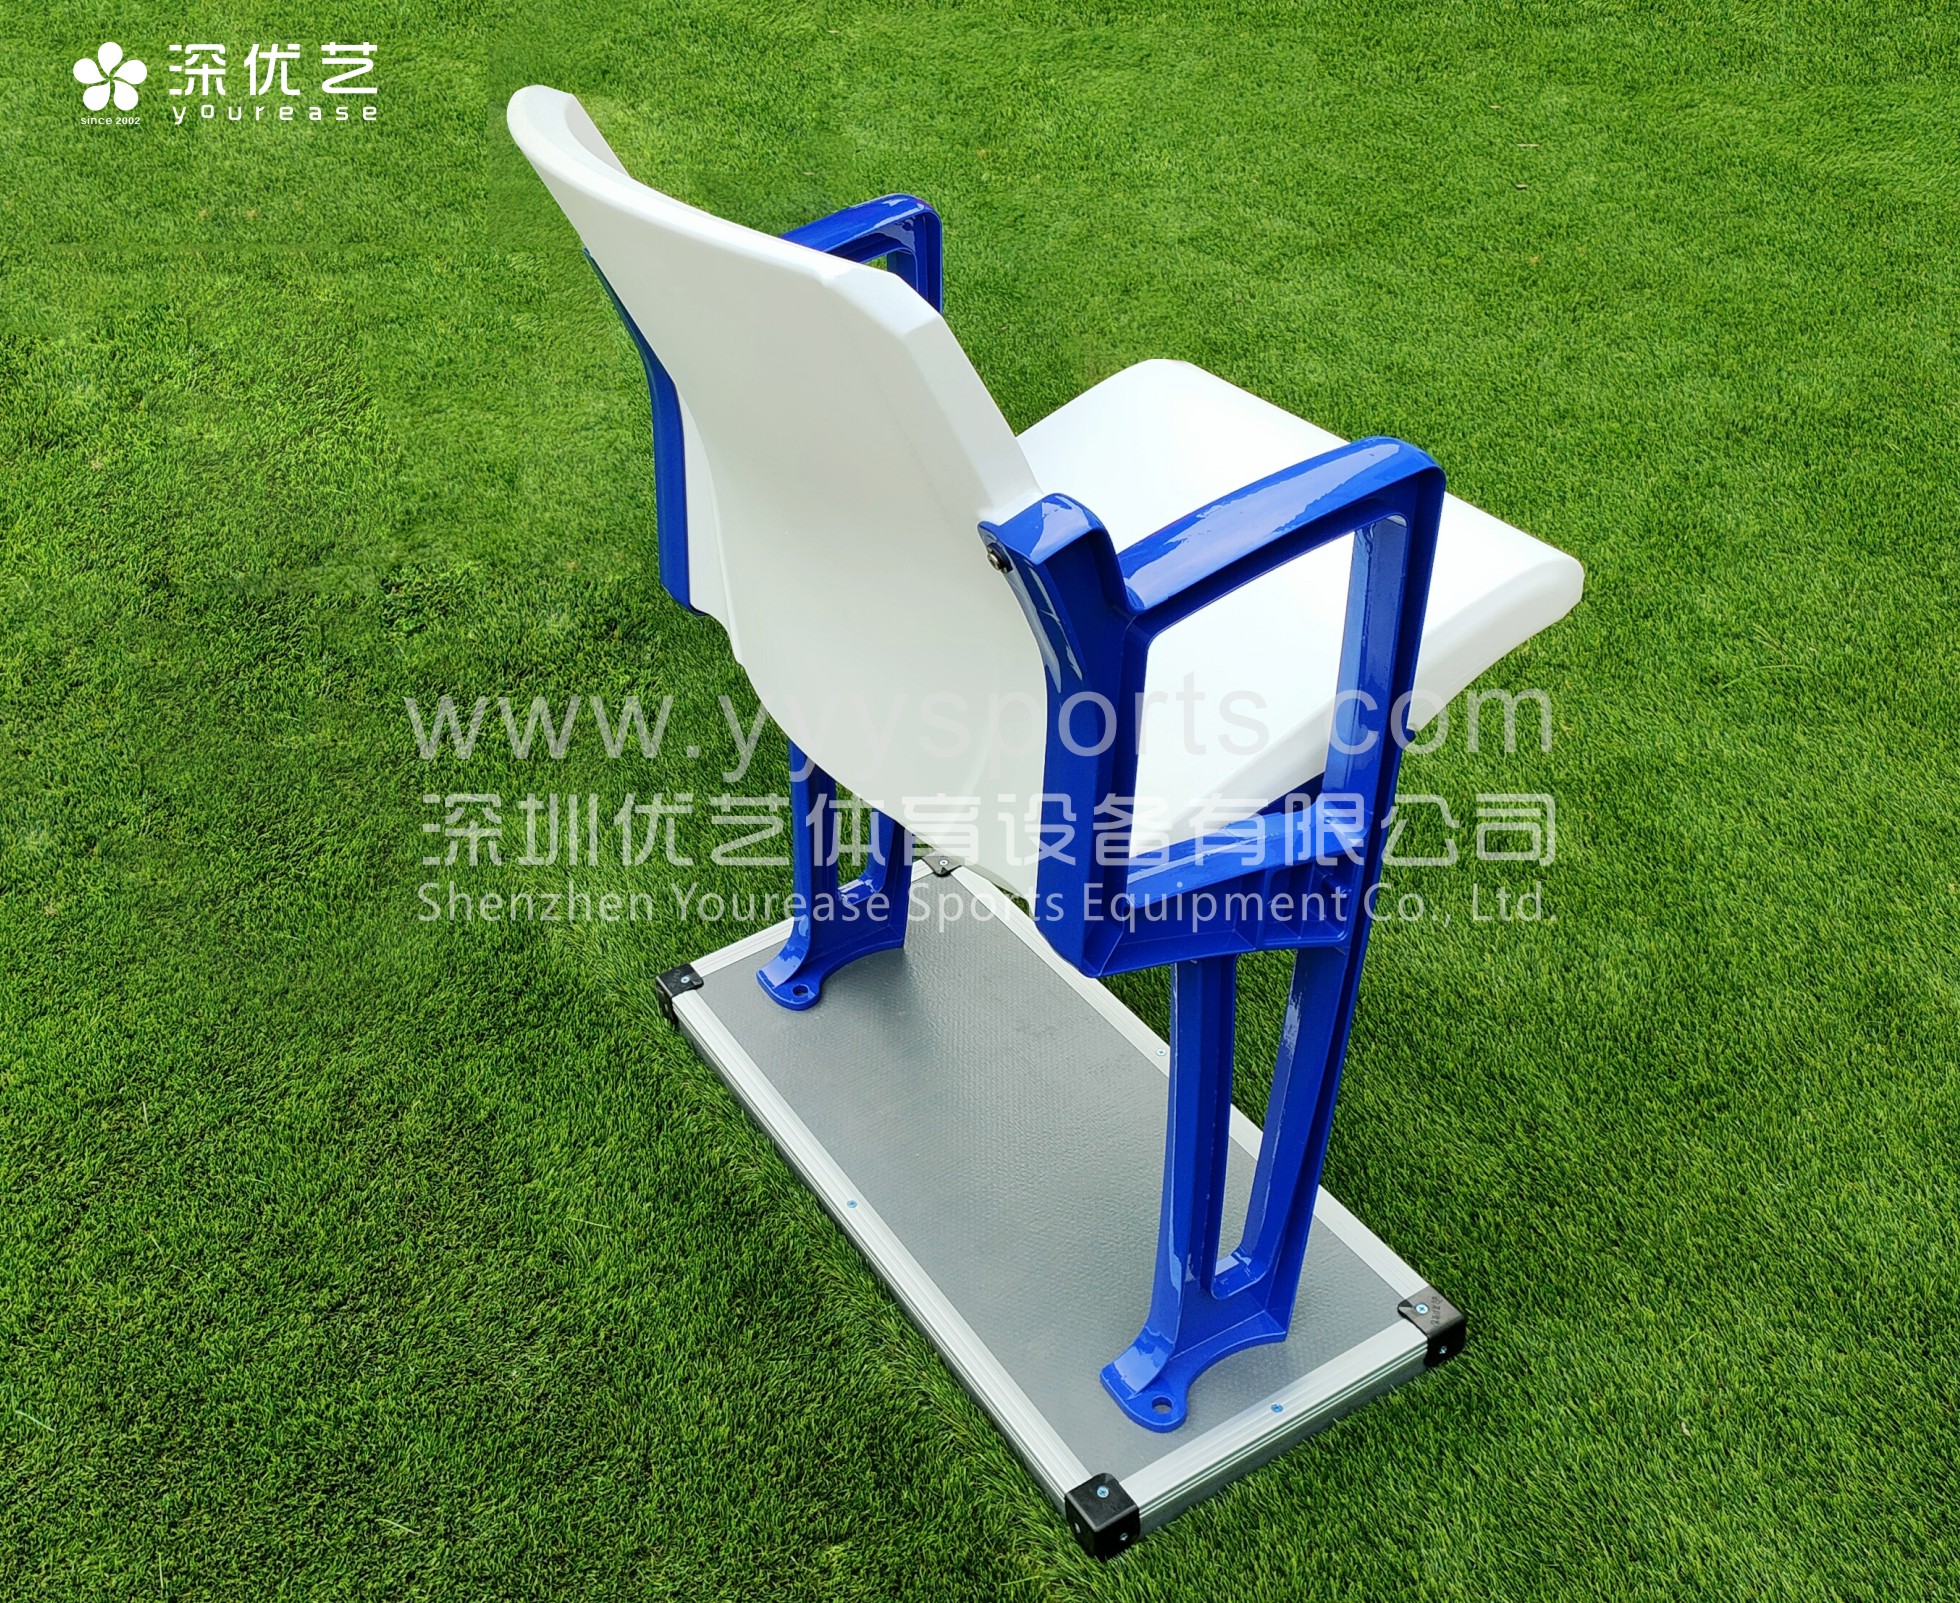 Yourease Football Plastic Stadium Chair Price အသားပေးပုံ